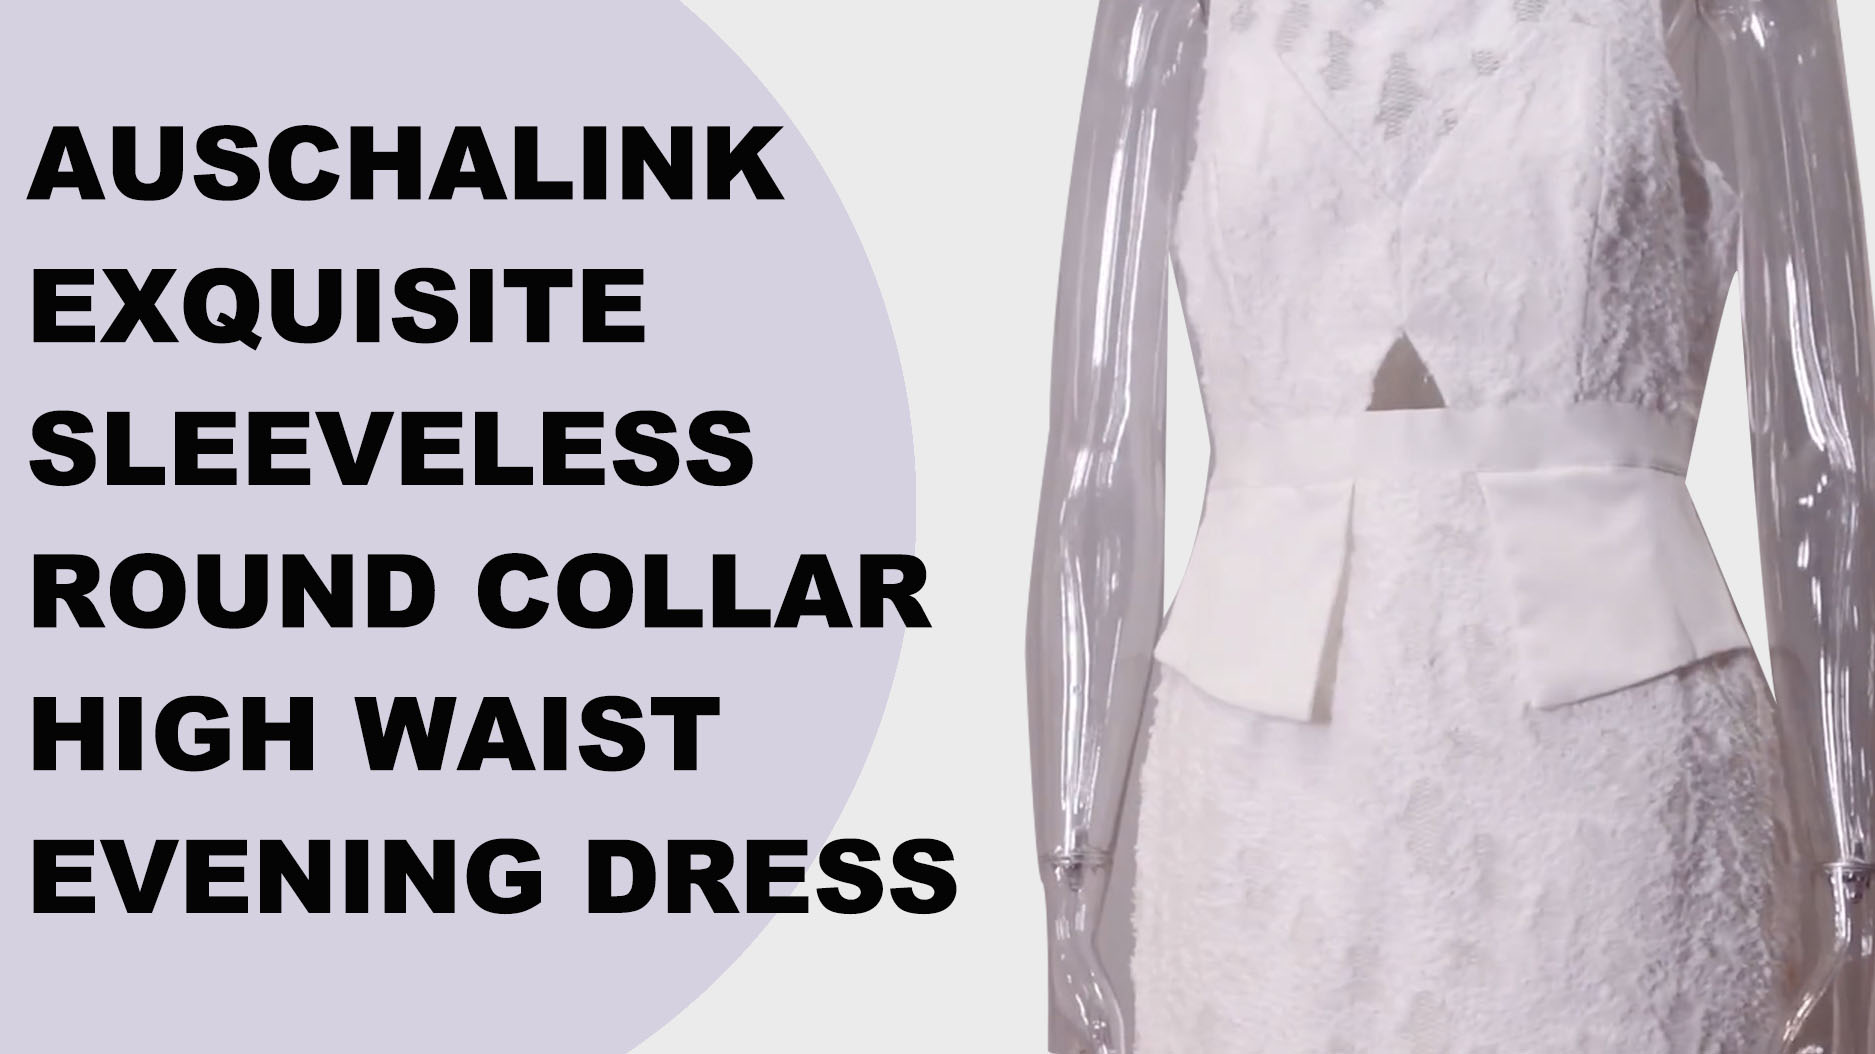 Wanawake Lady Evening Dress Fashion Sleeveless Round Collar